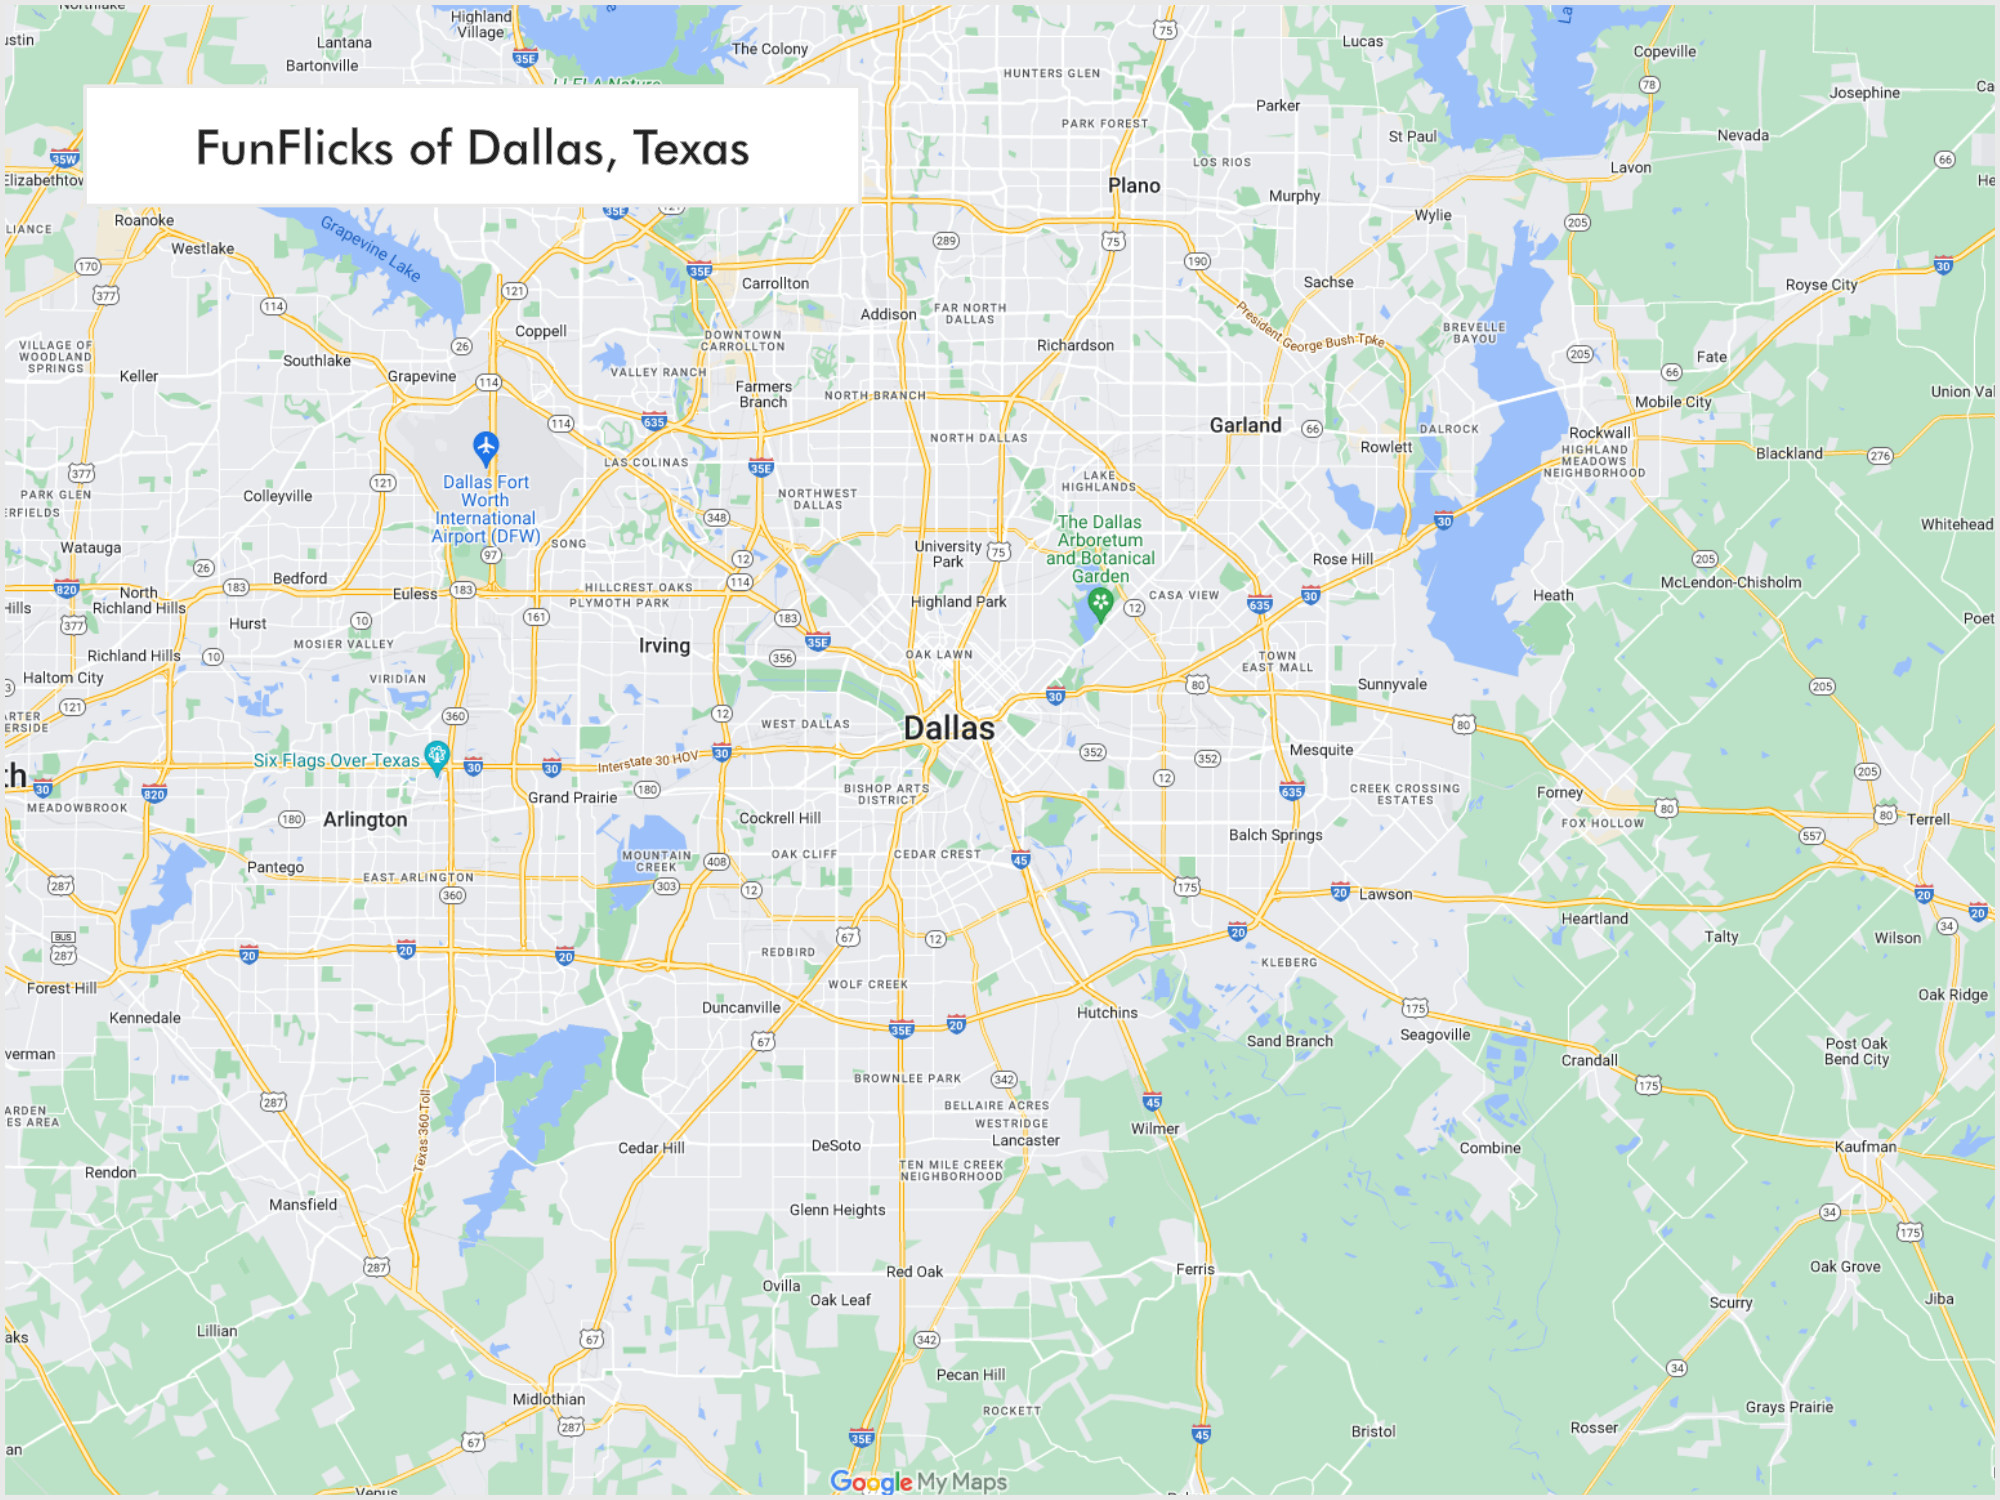 FunFlicks® Dallas territory map